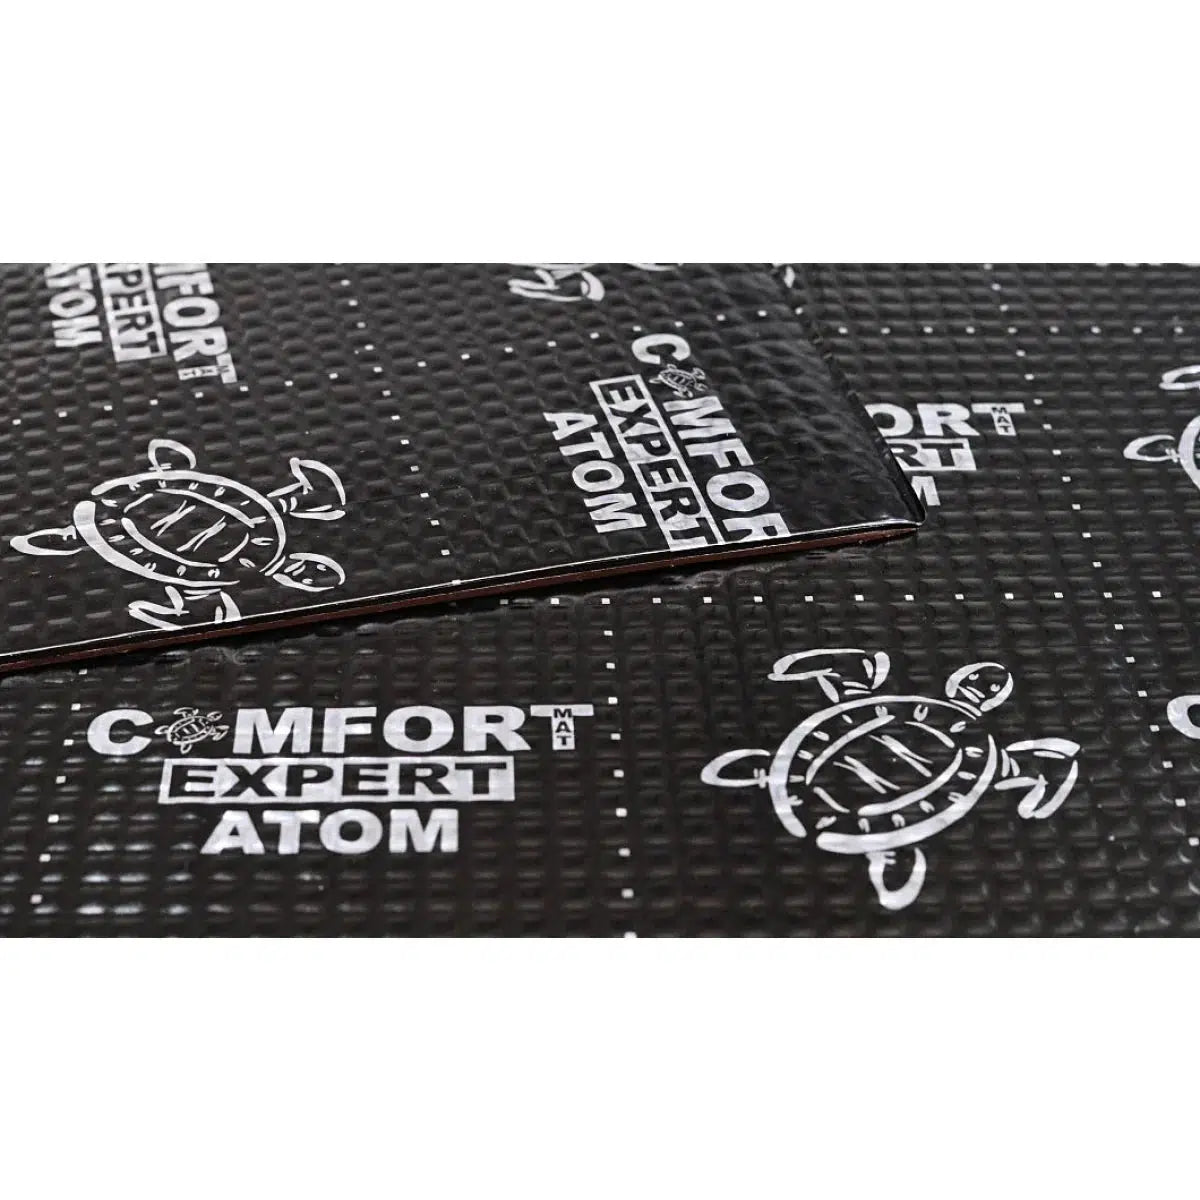 Comfort Mat-Atom Bomb 4.2mm insulation-Masori.de